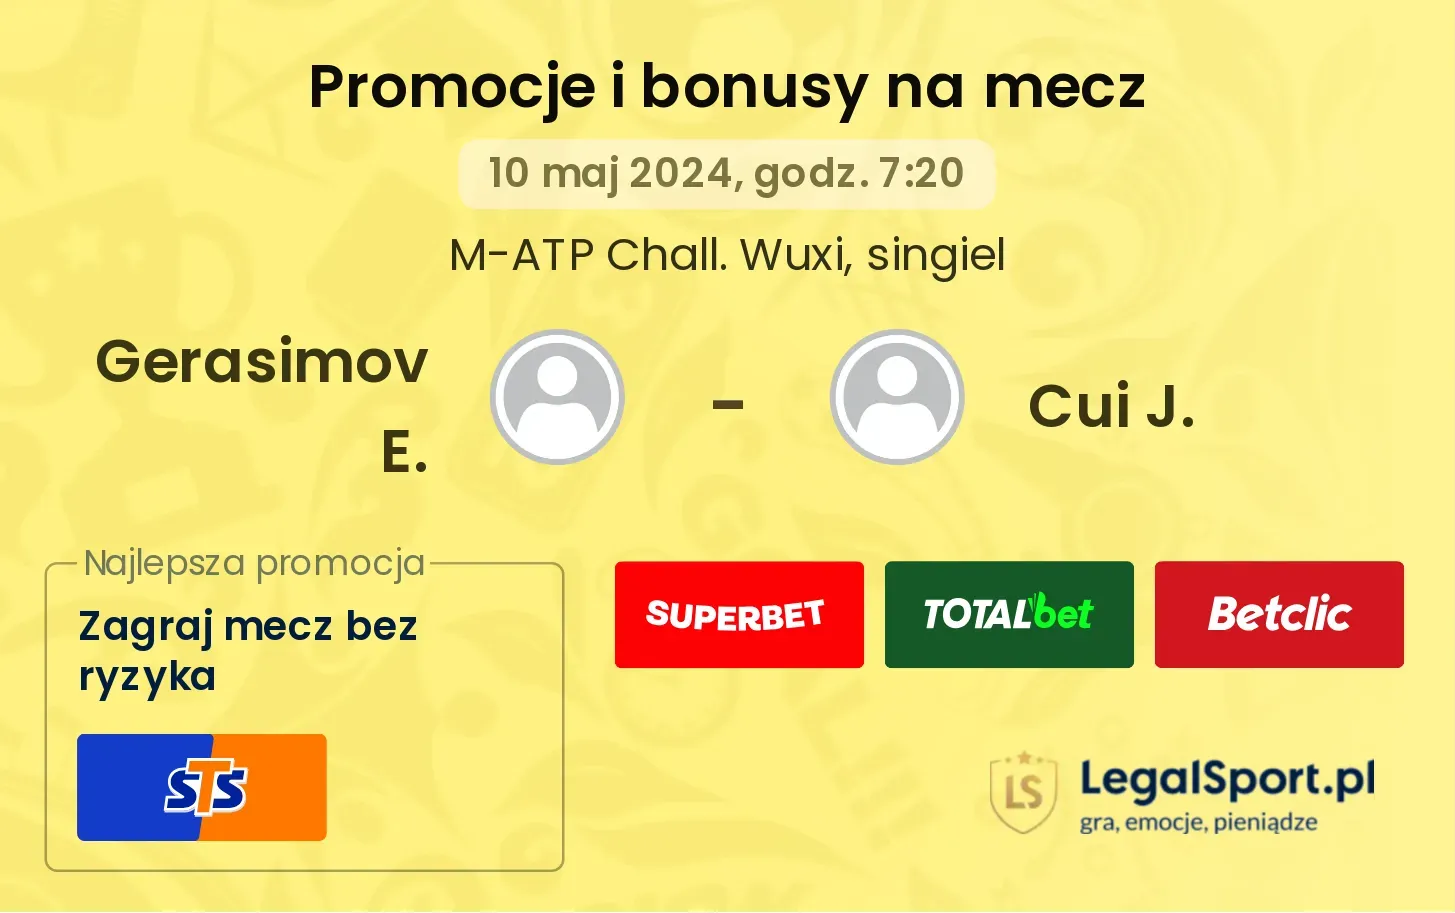 Gerasimov E. - Cui J. promocje bonusy na mecz